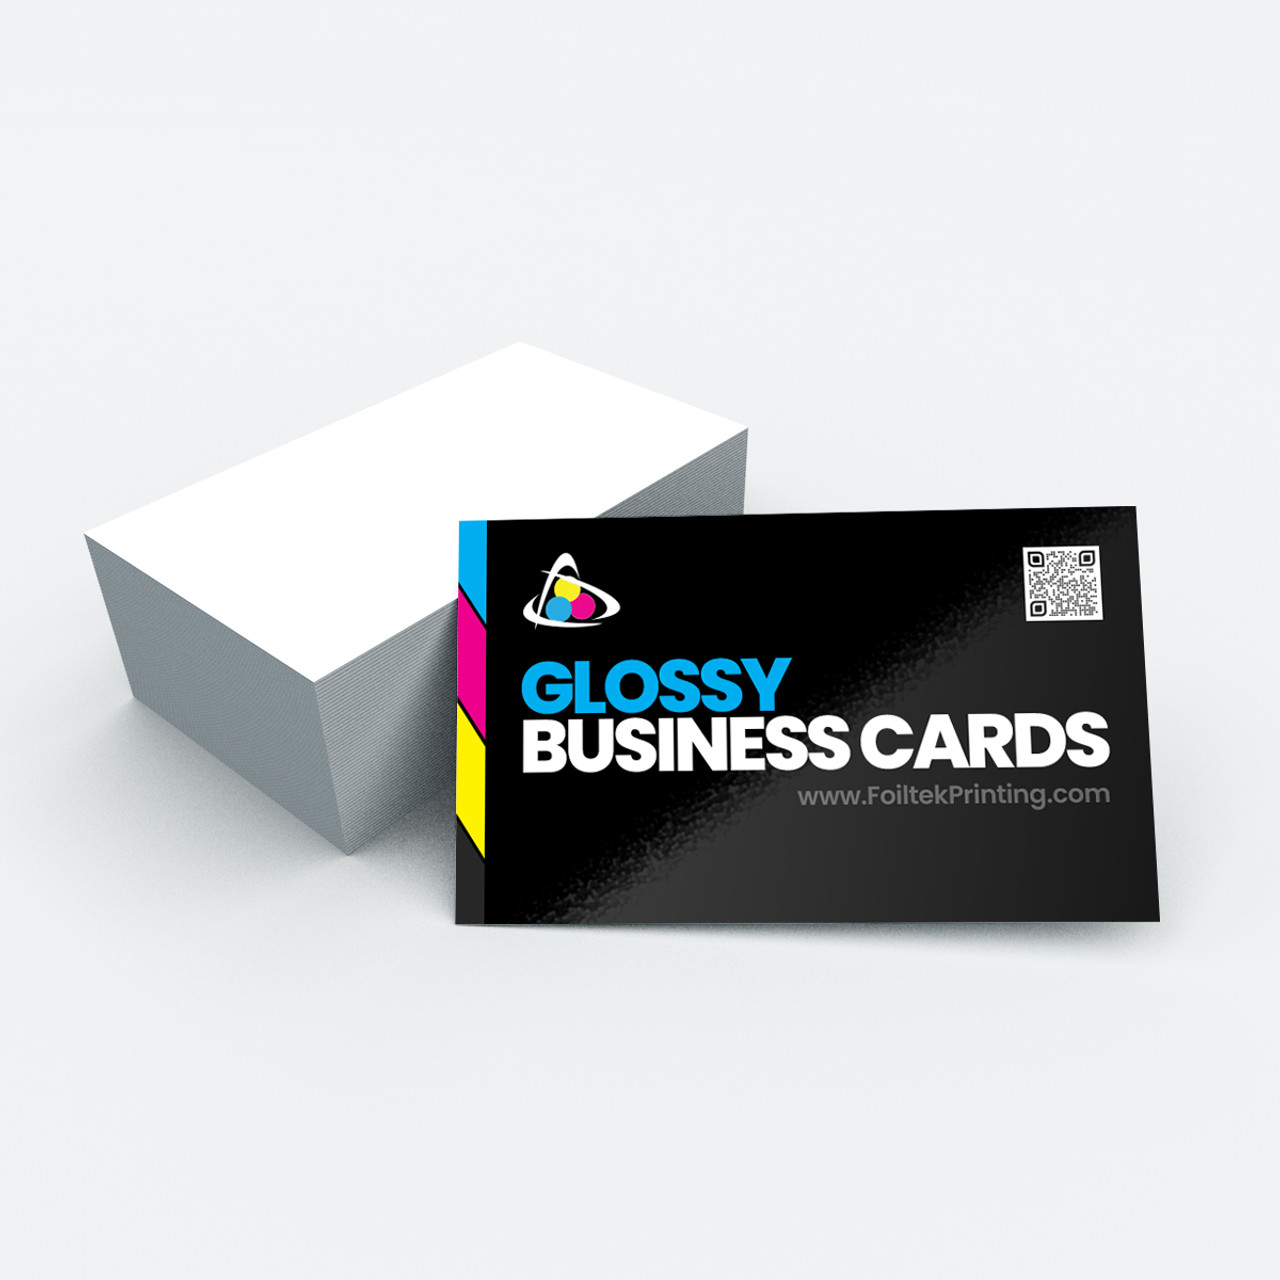 BMD Printing · Business Cards - 16pt Premium